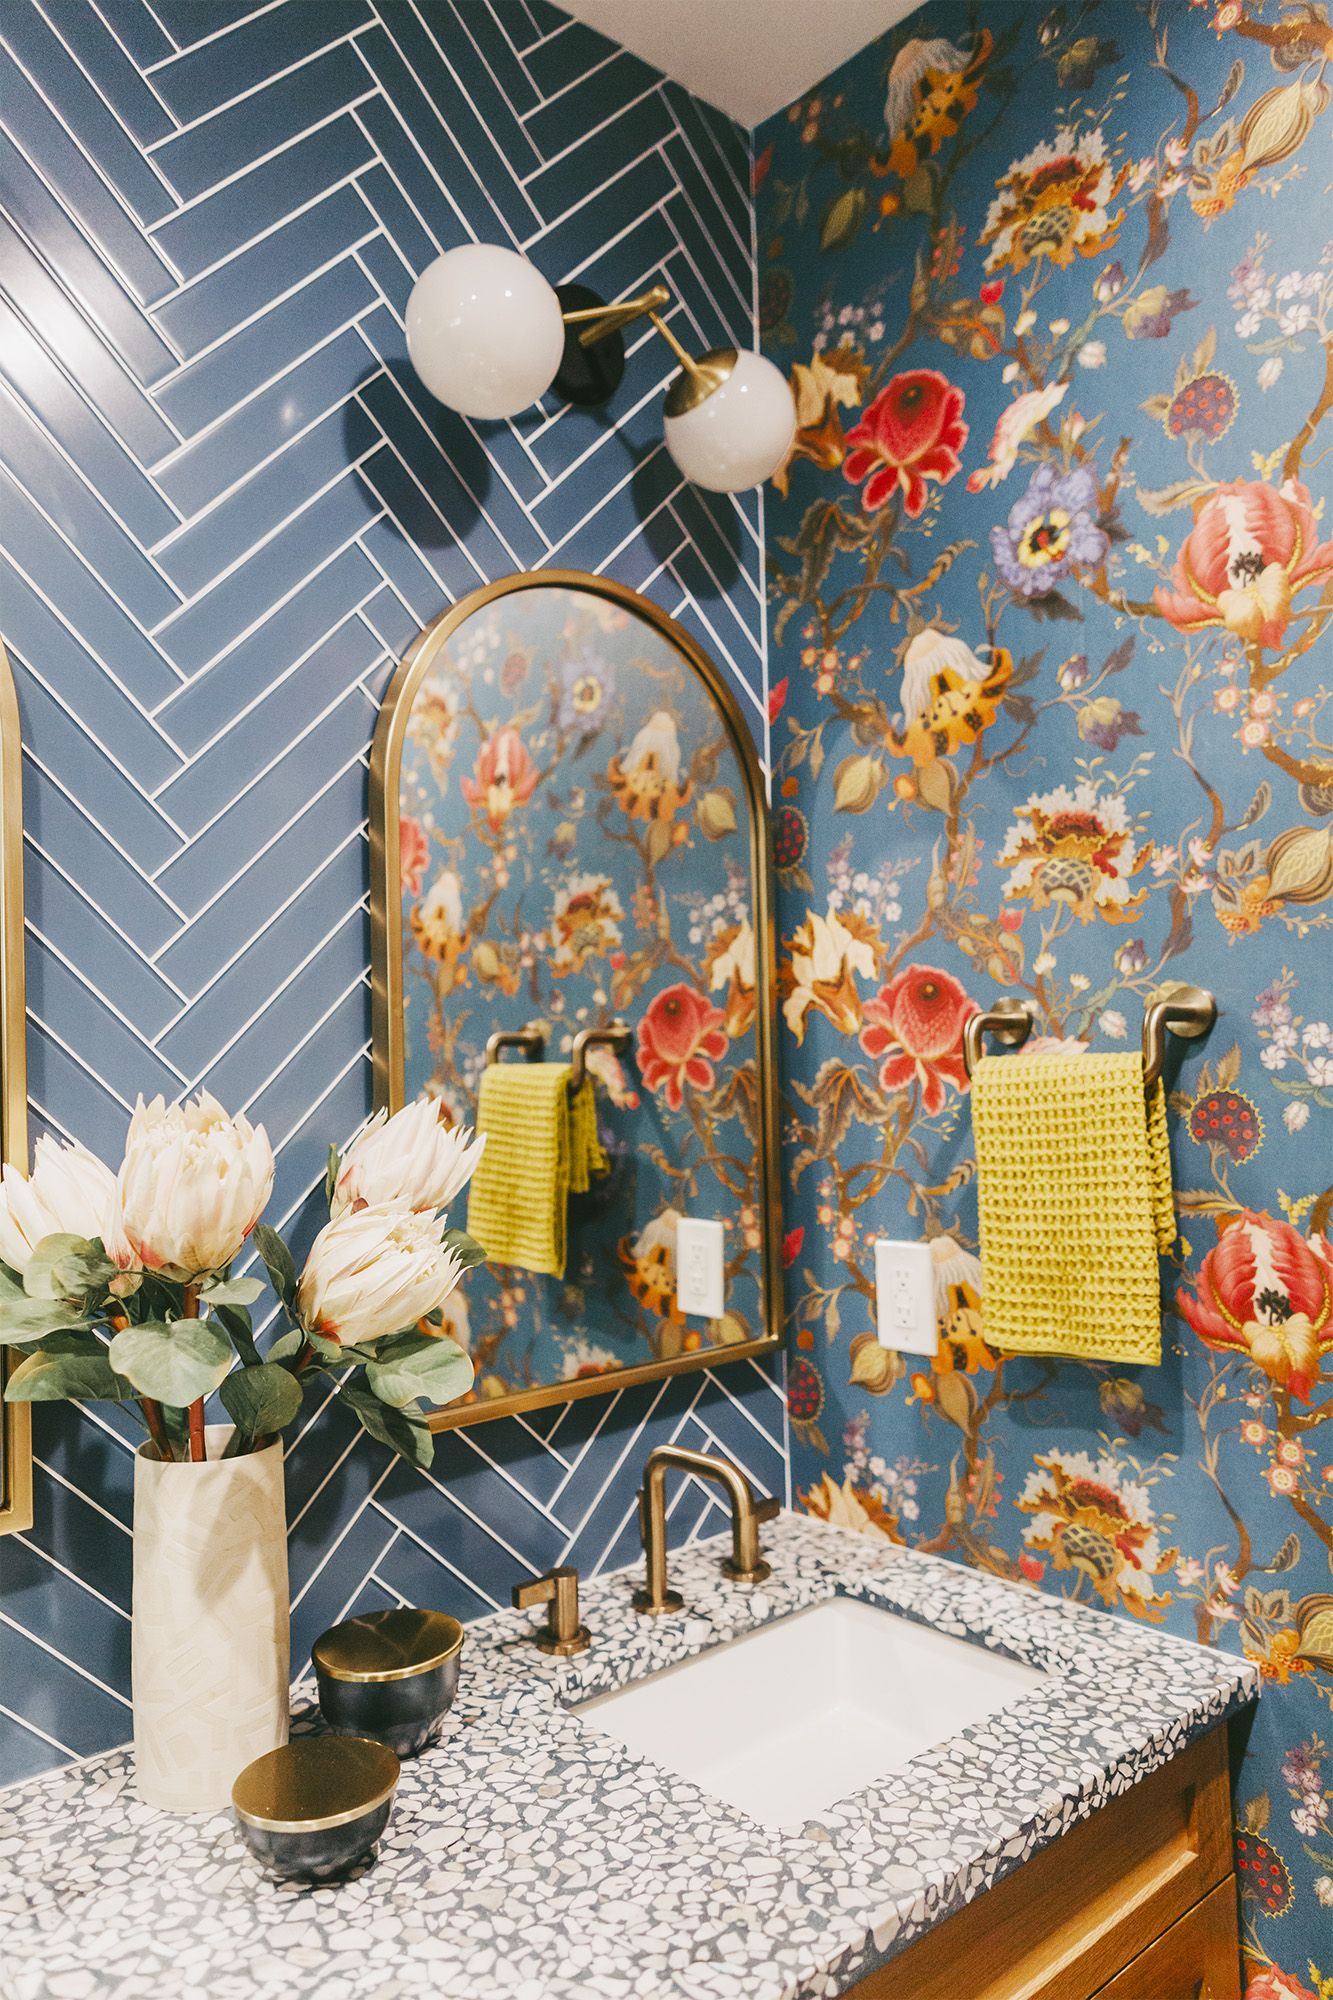 20 Best Bathroom Mirror Ideas - Bathroom Mirror Designs for Sinks